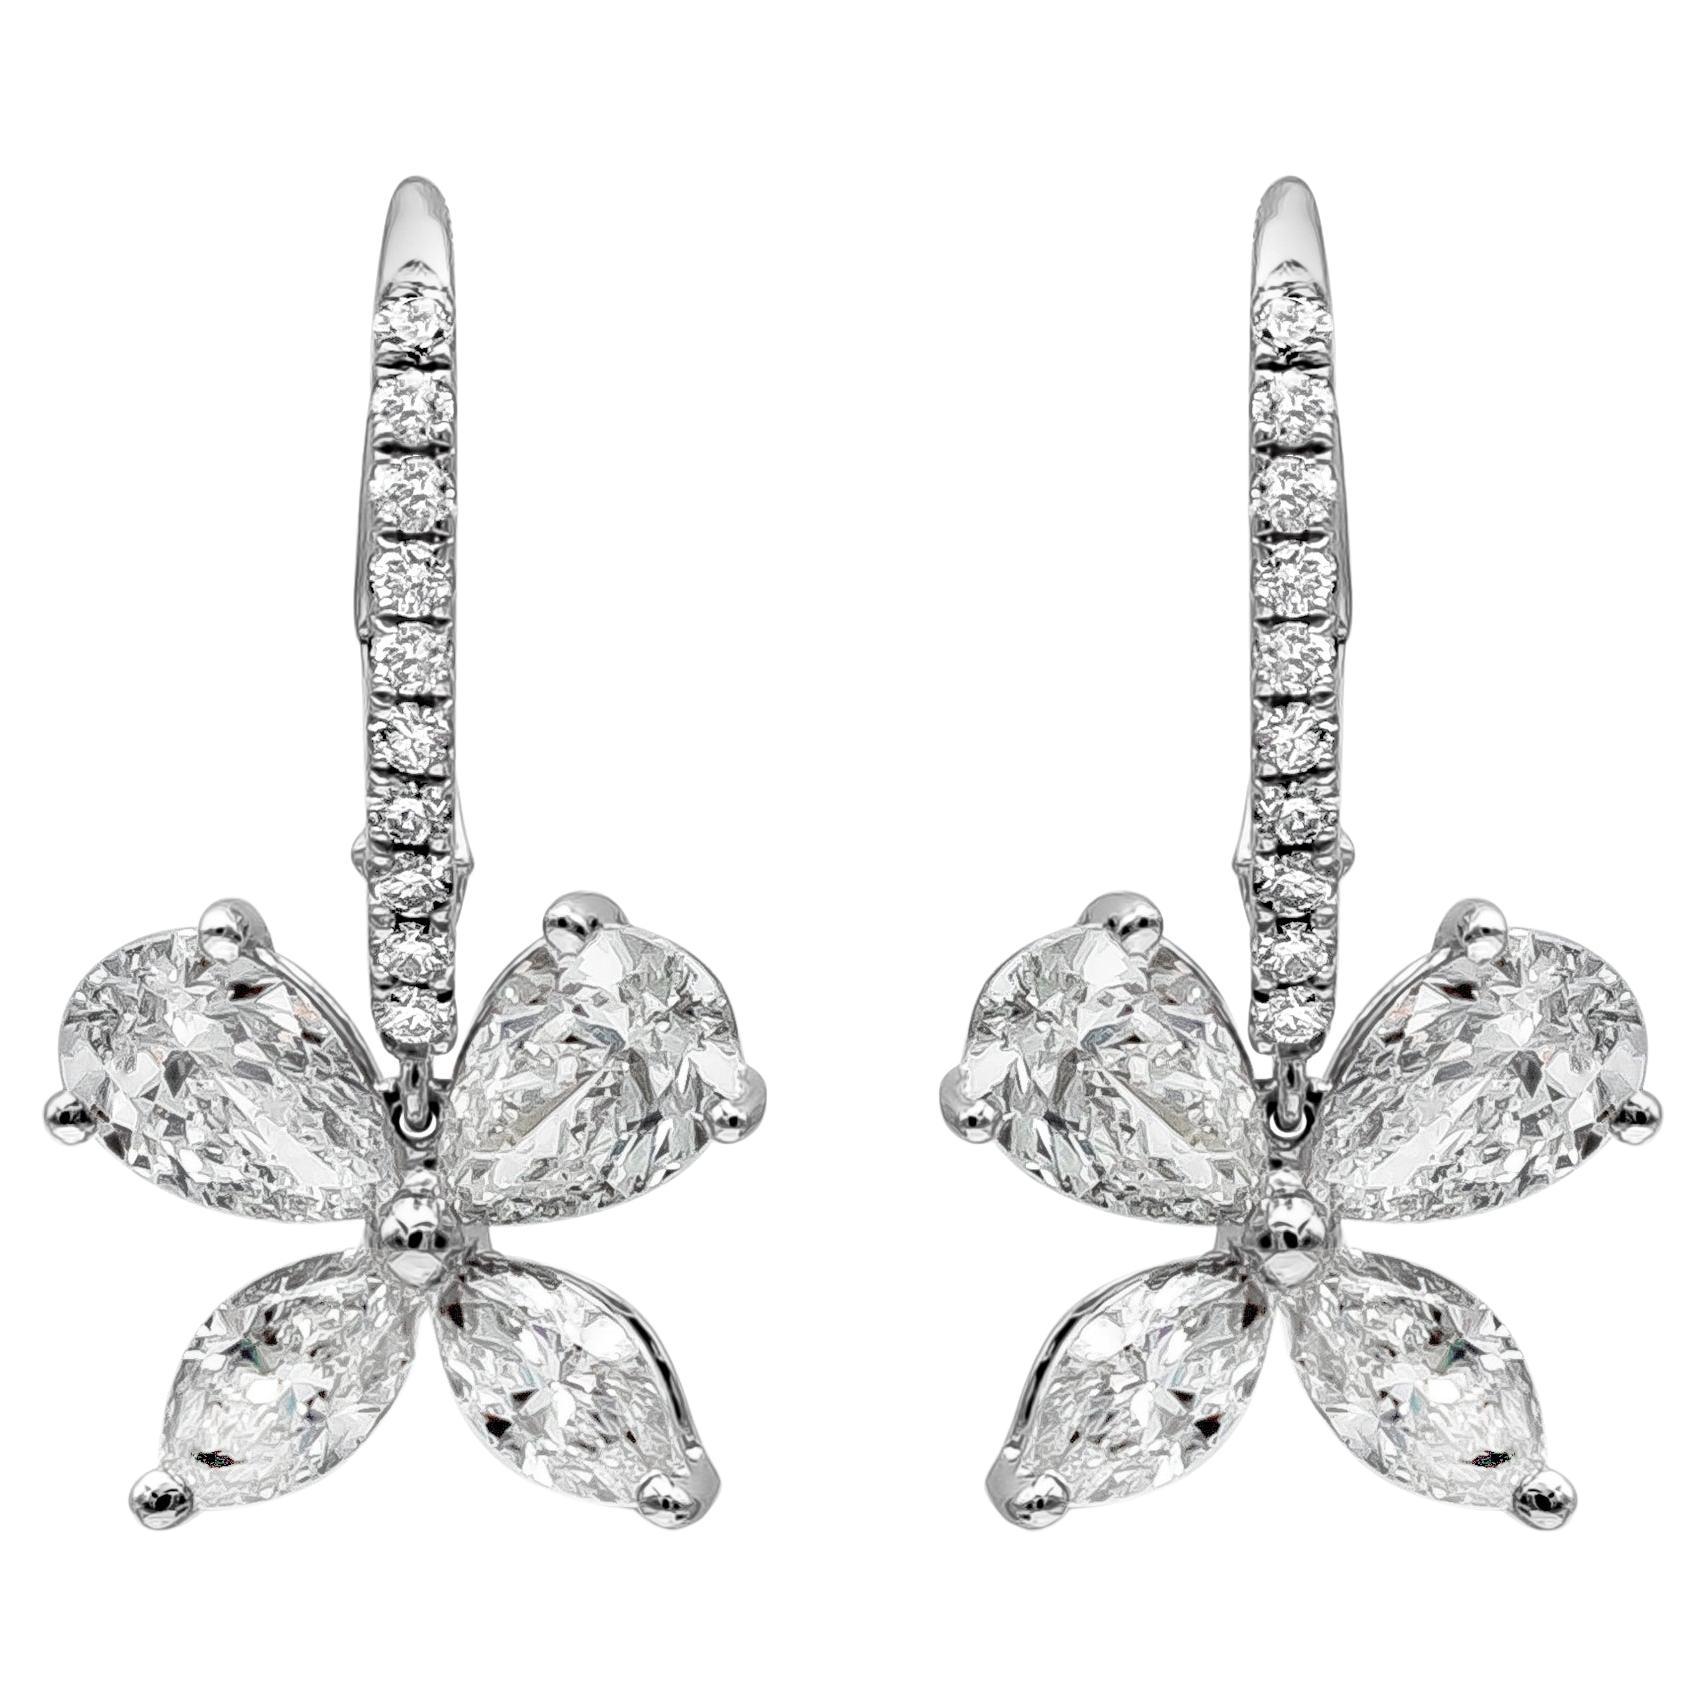 Roman Malakov 2.54 Carats Total Mixed-Shape Diamonds Drop Earrings